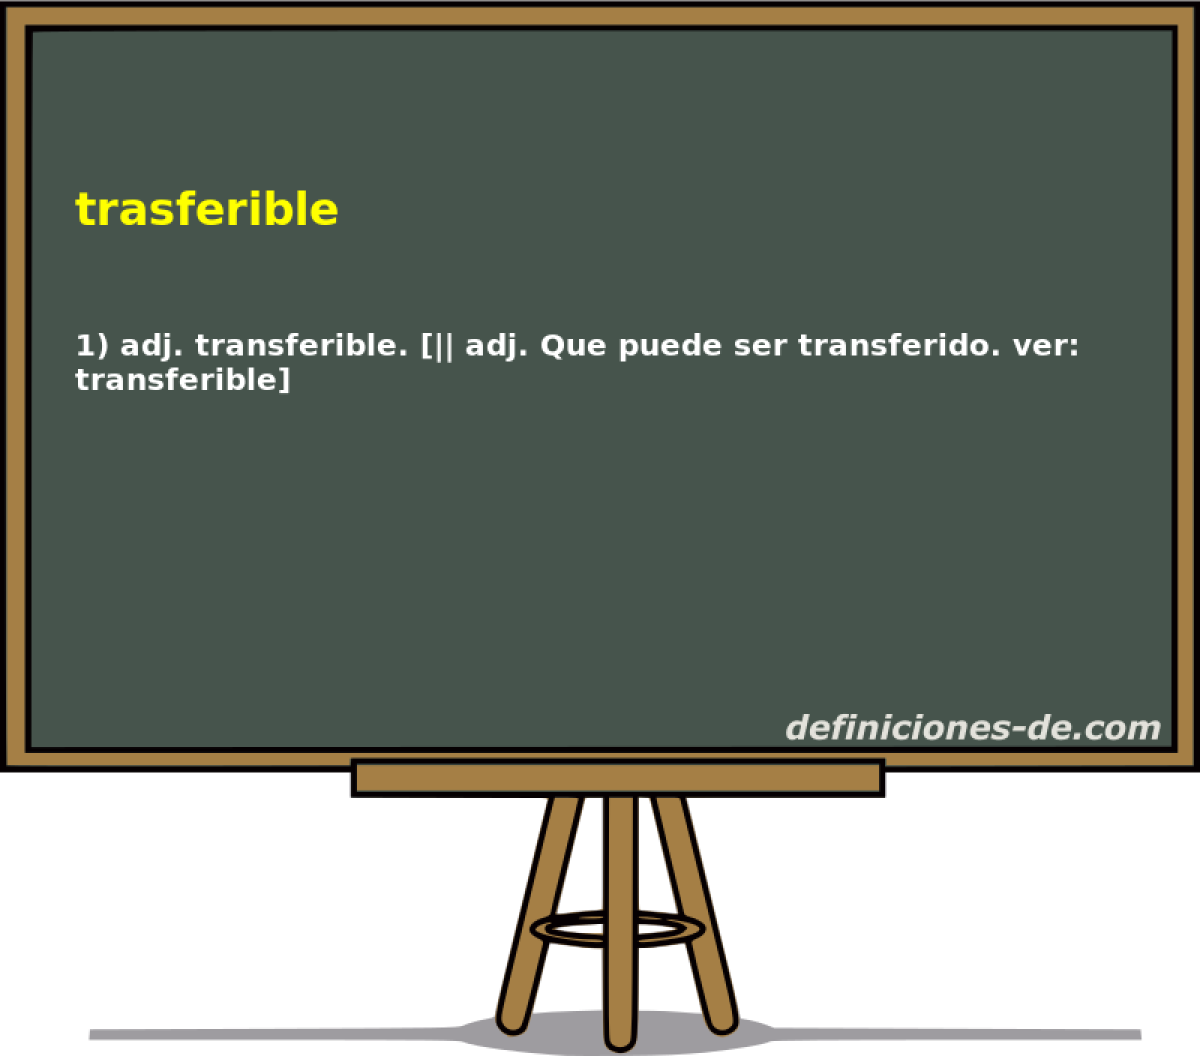 trasferible 